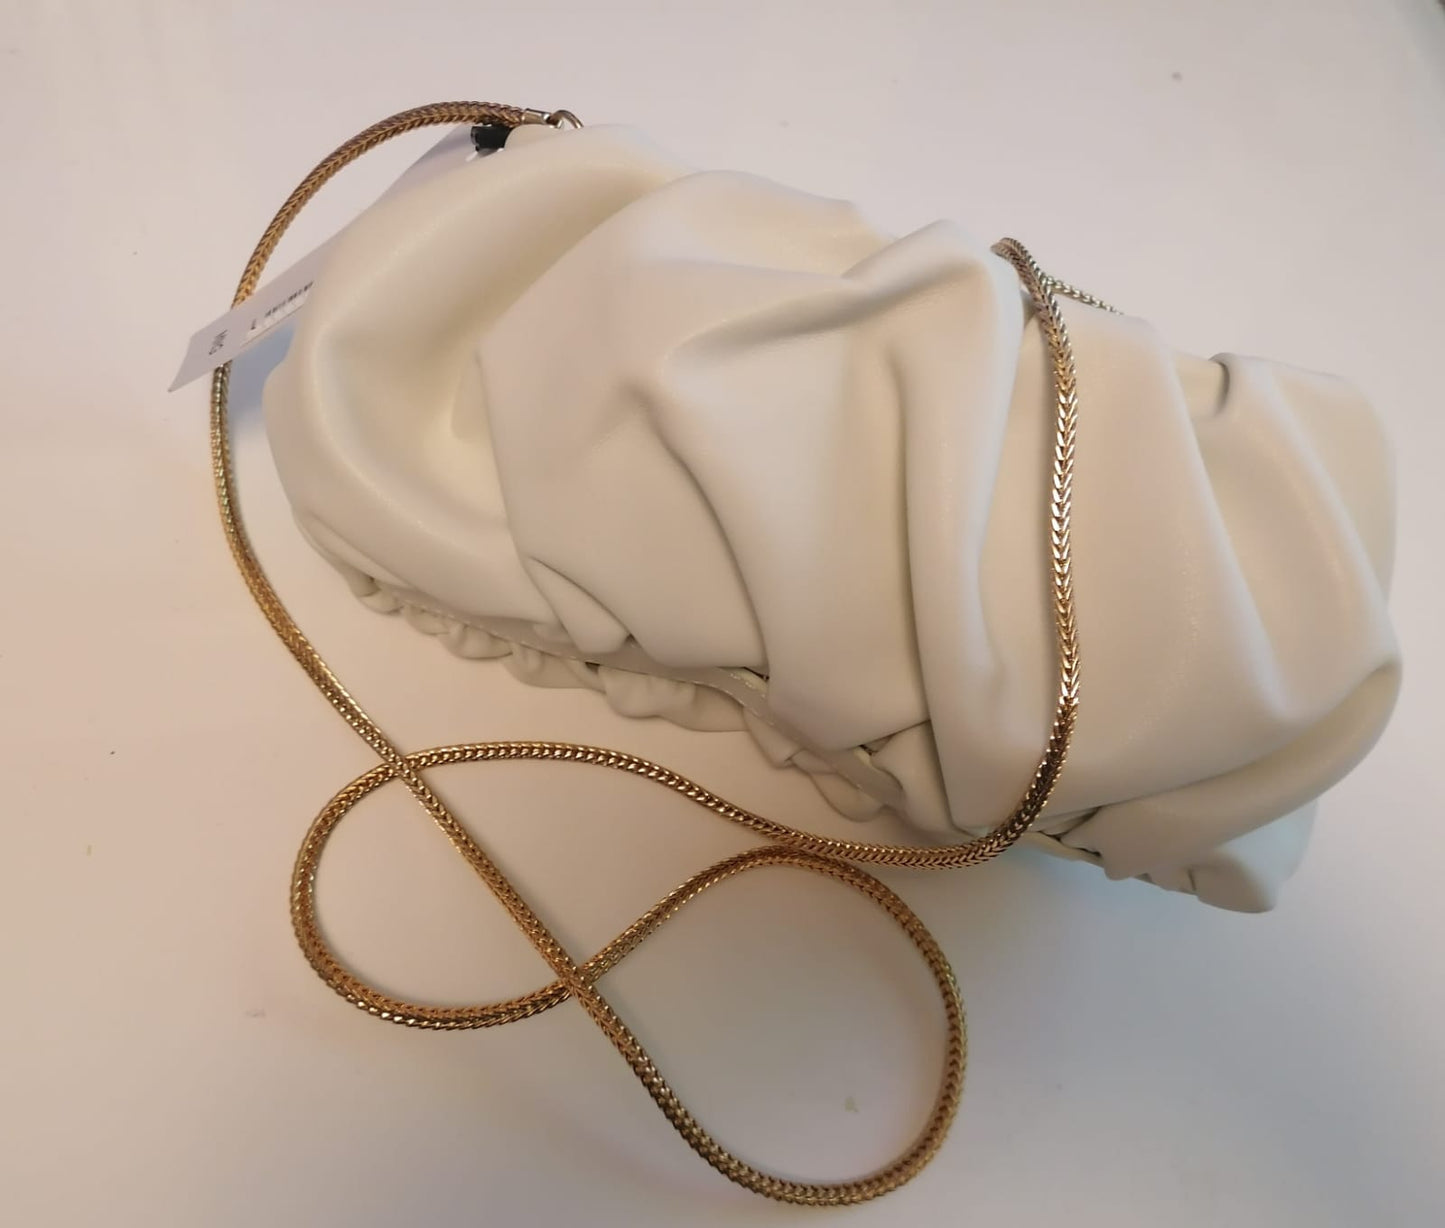 Ladies white handbag/clutch